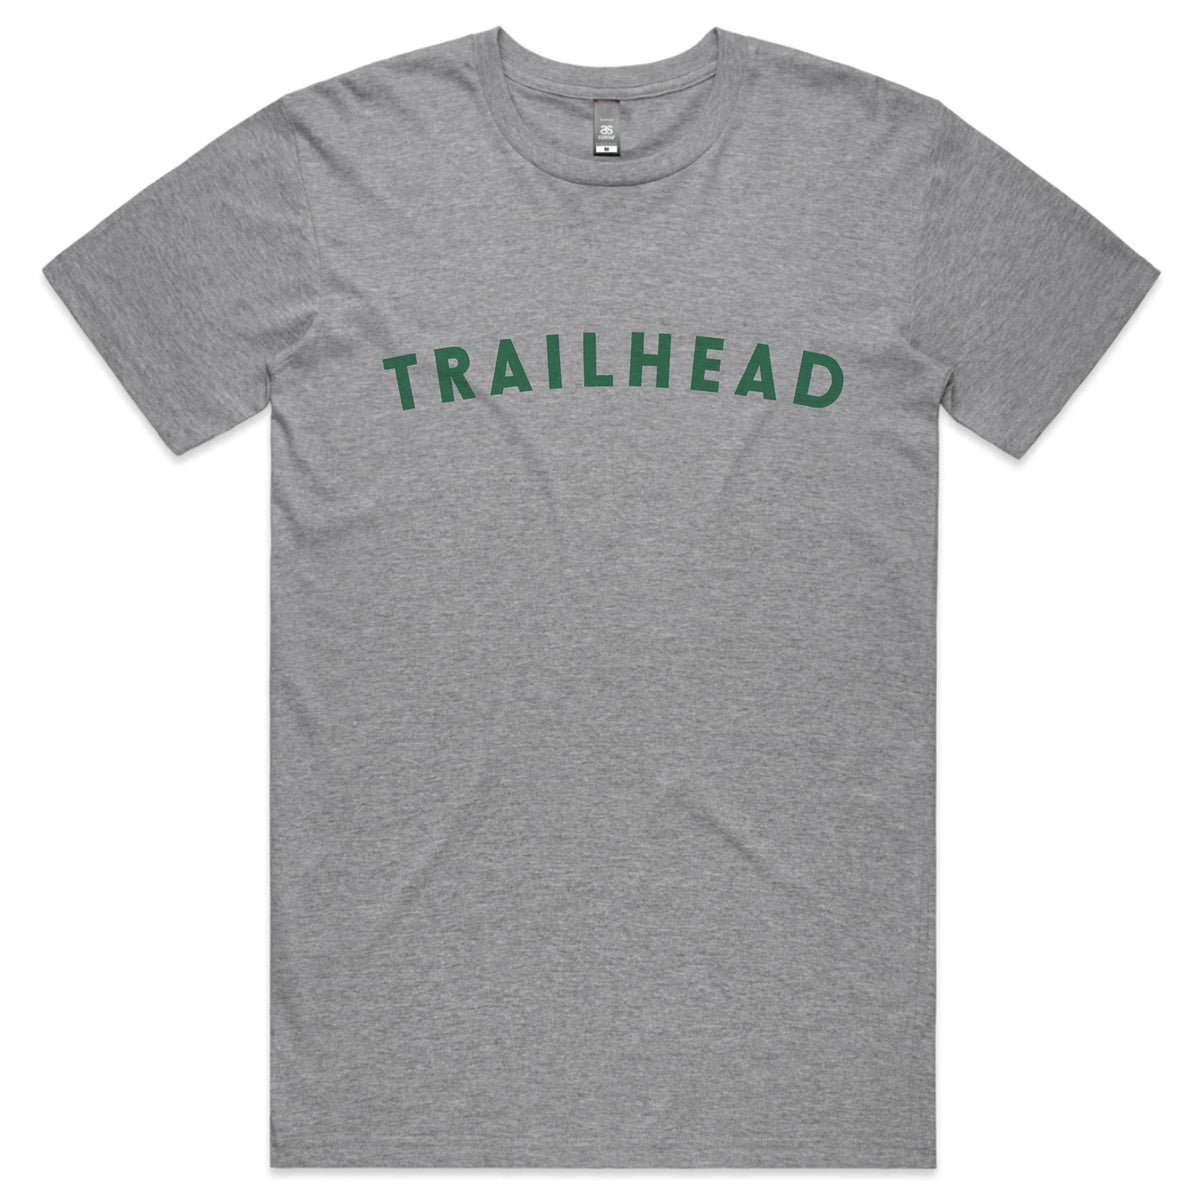 Trailhead T-shirt